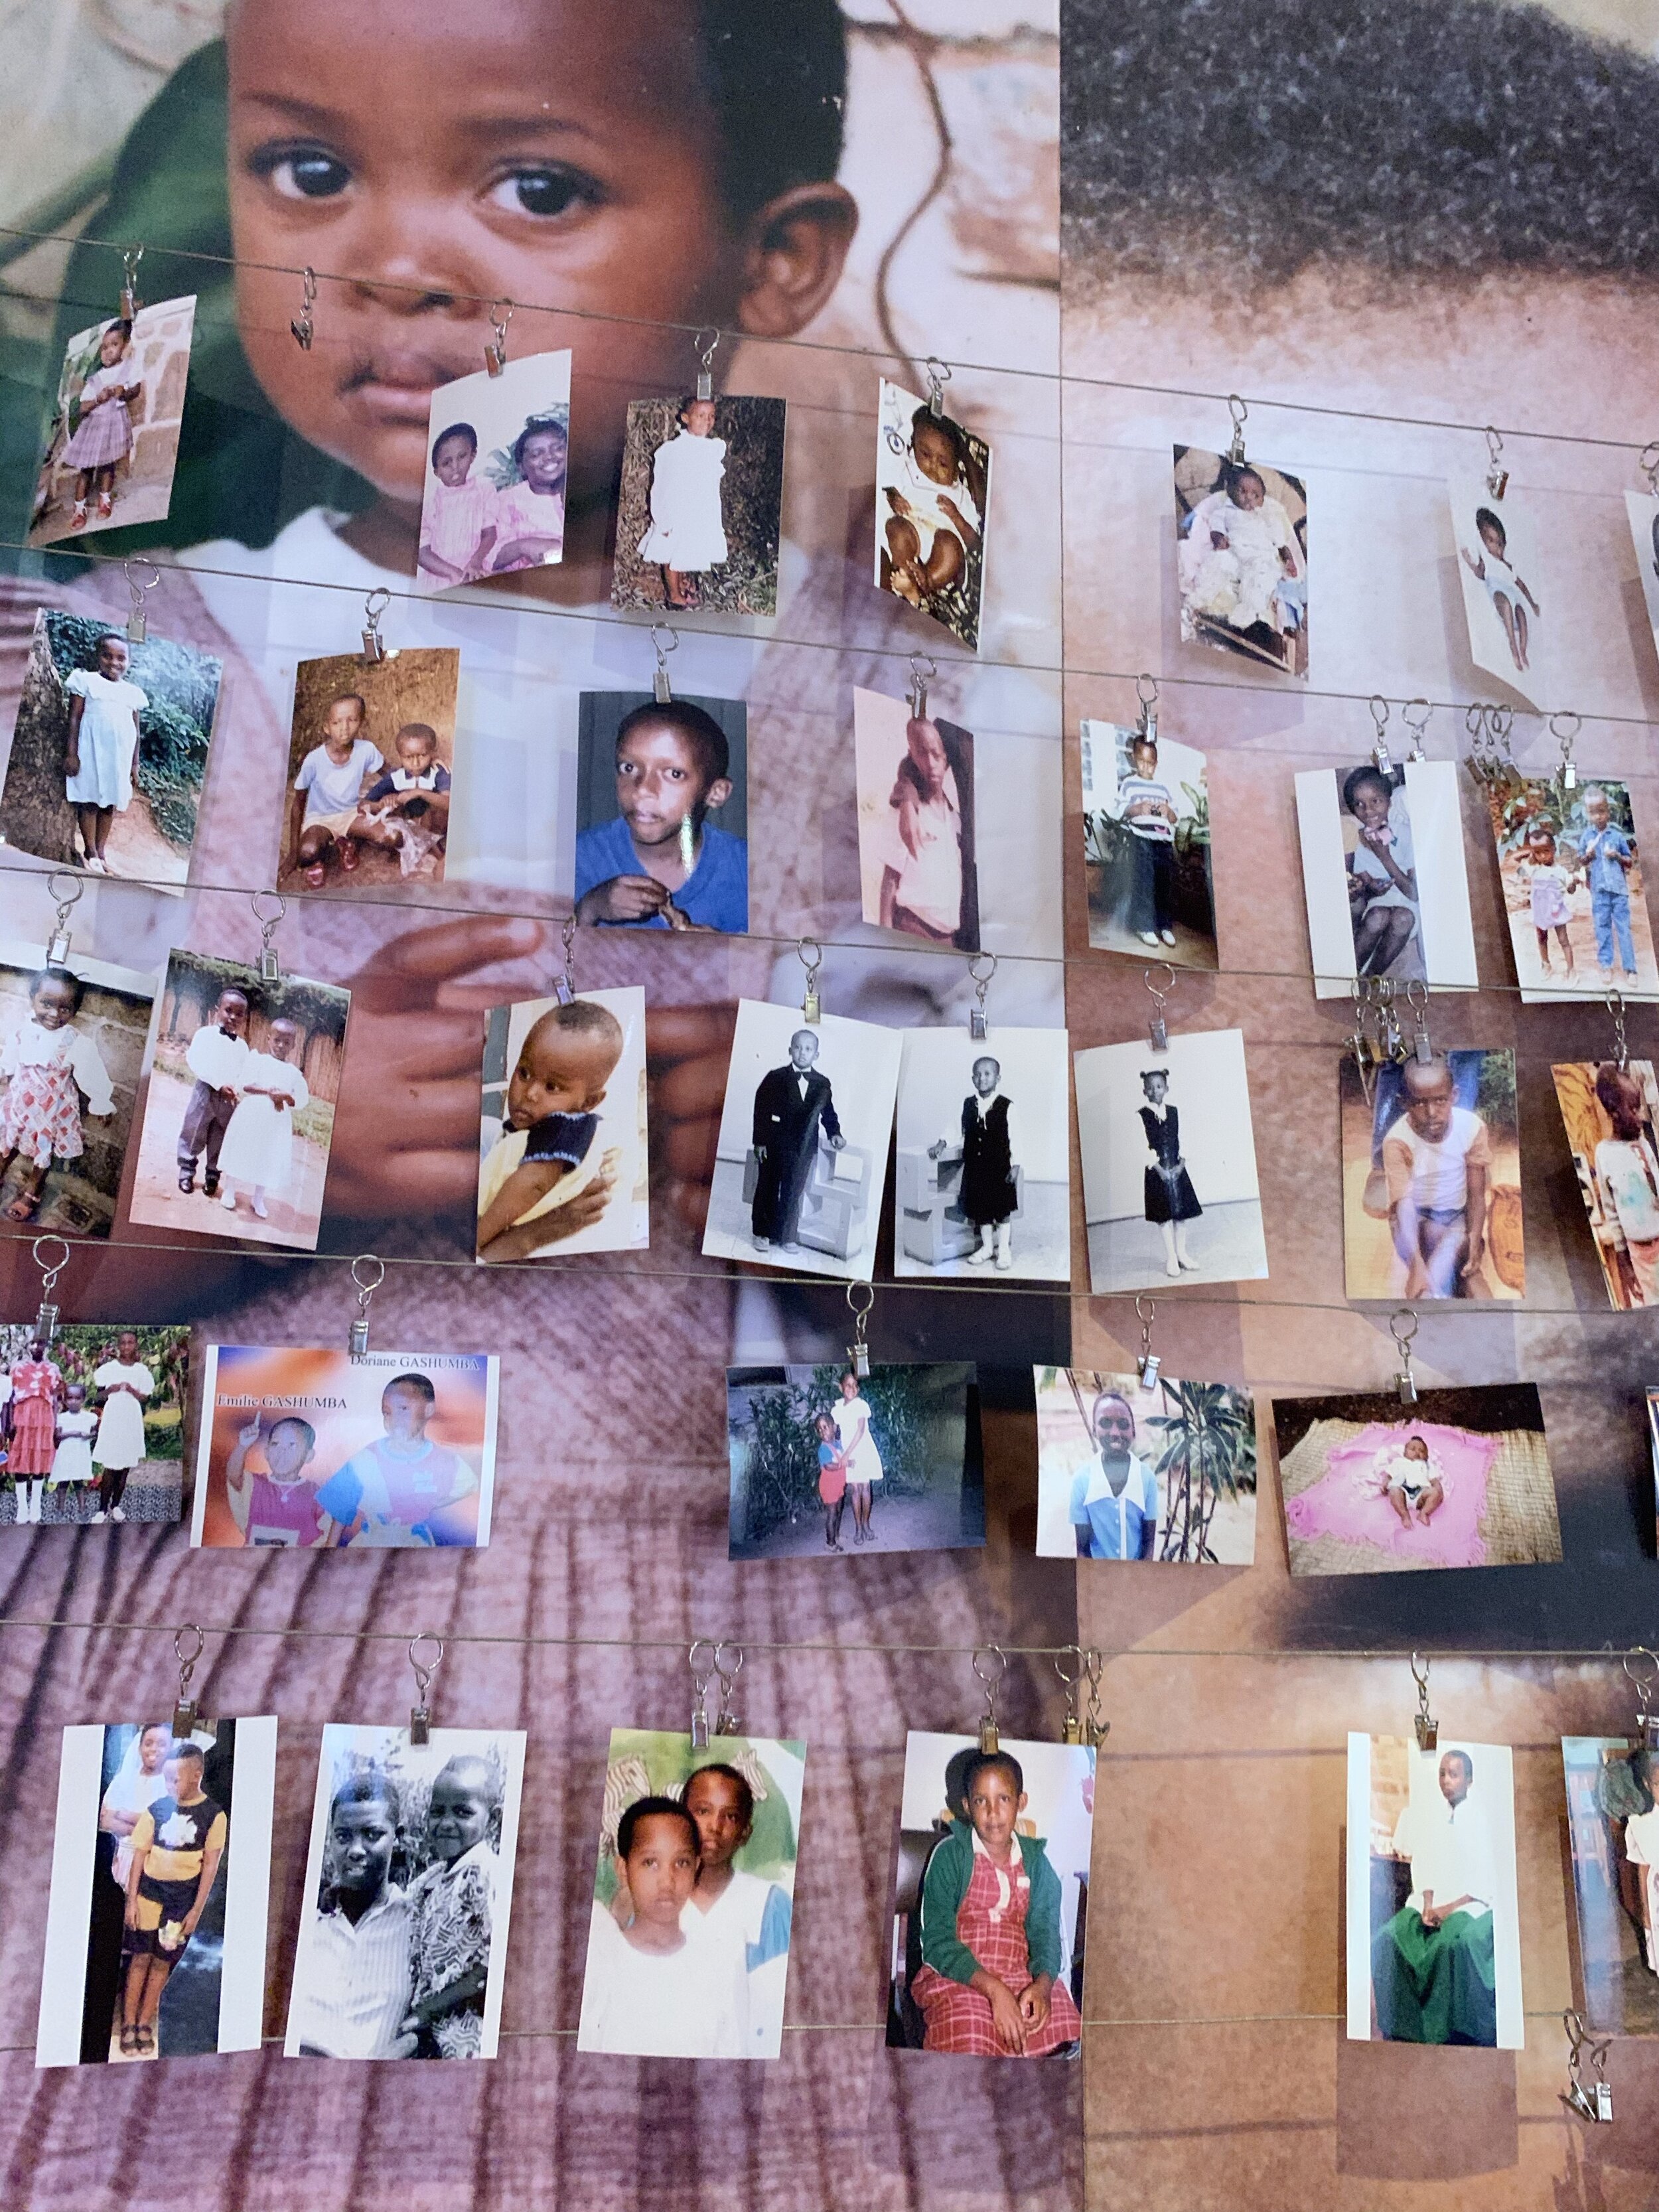 Kigali Genocide Memorial victim photos #4.jpg